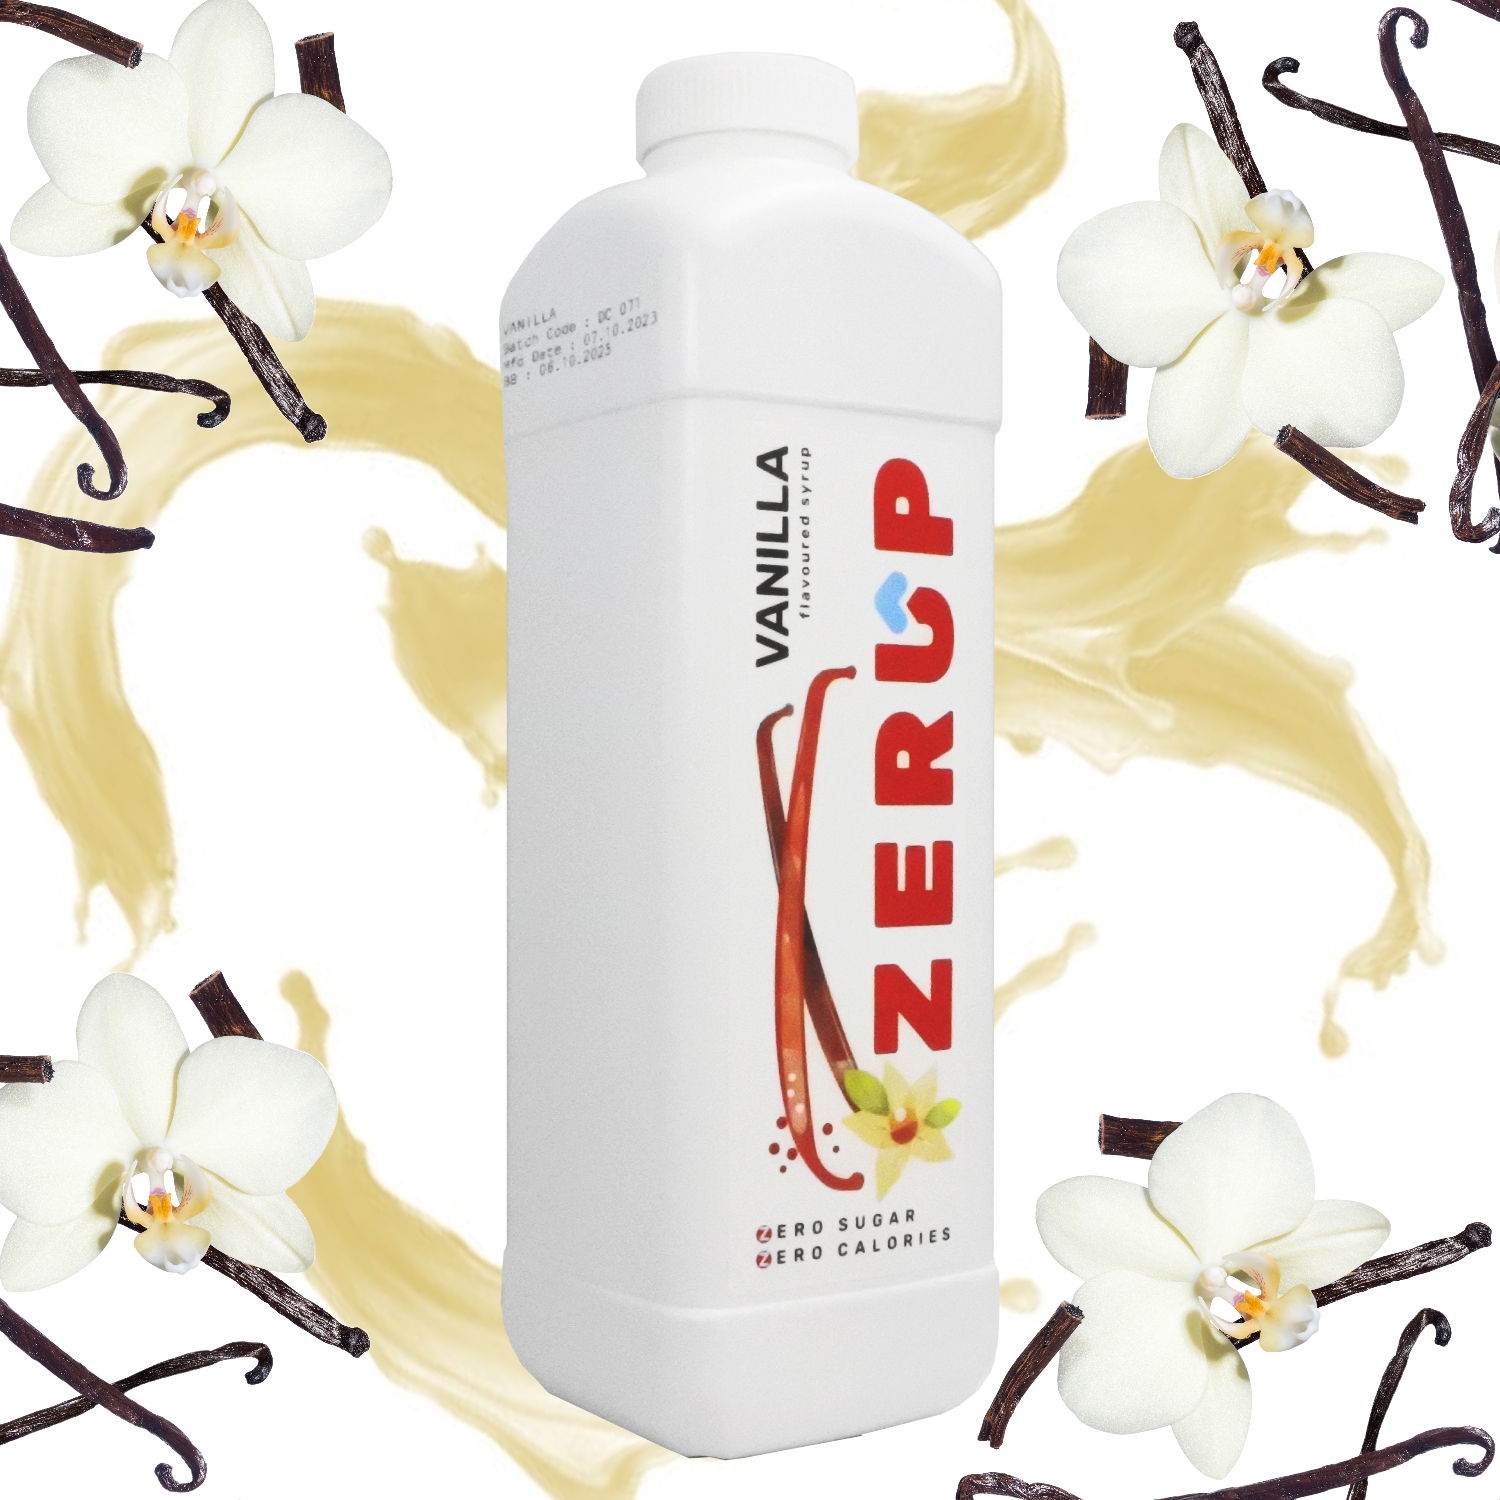 Zerup Zero Sugar Vanilla Syrup 1L